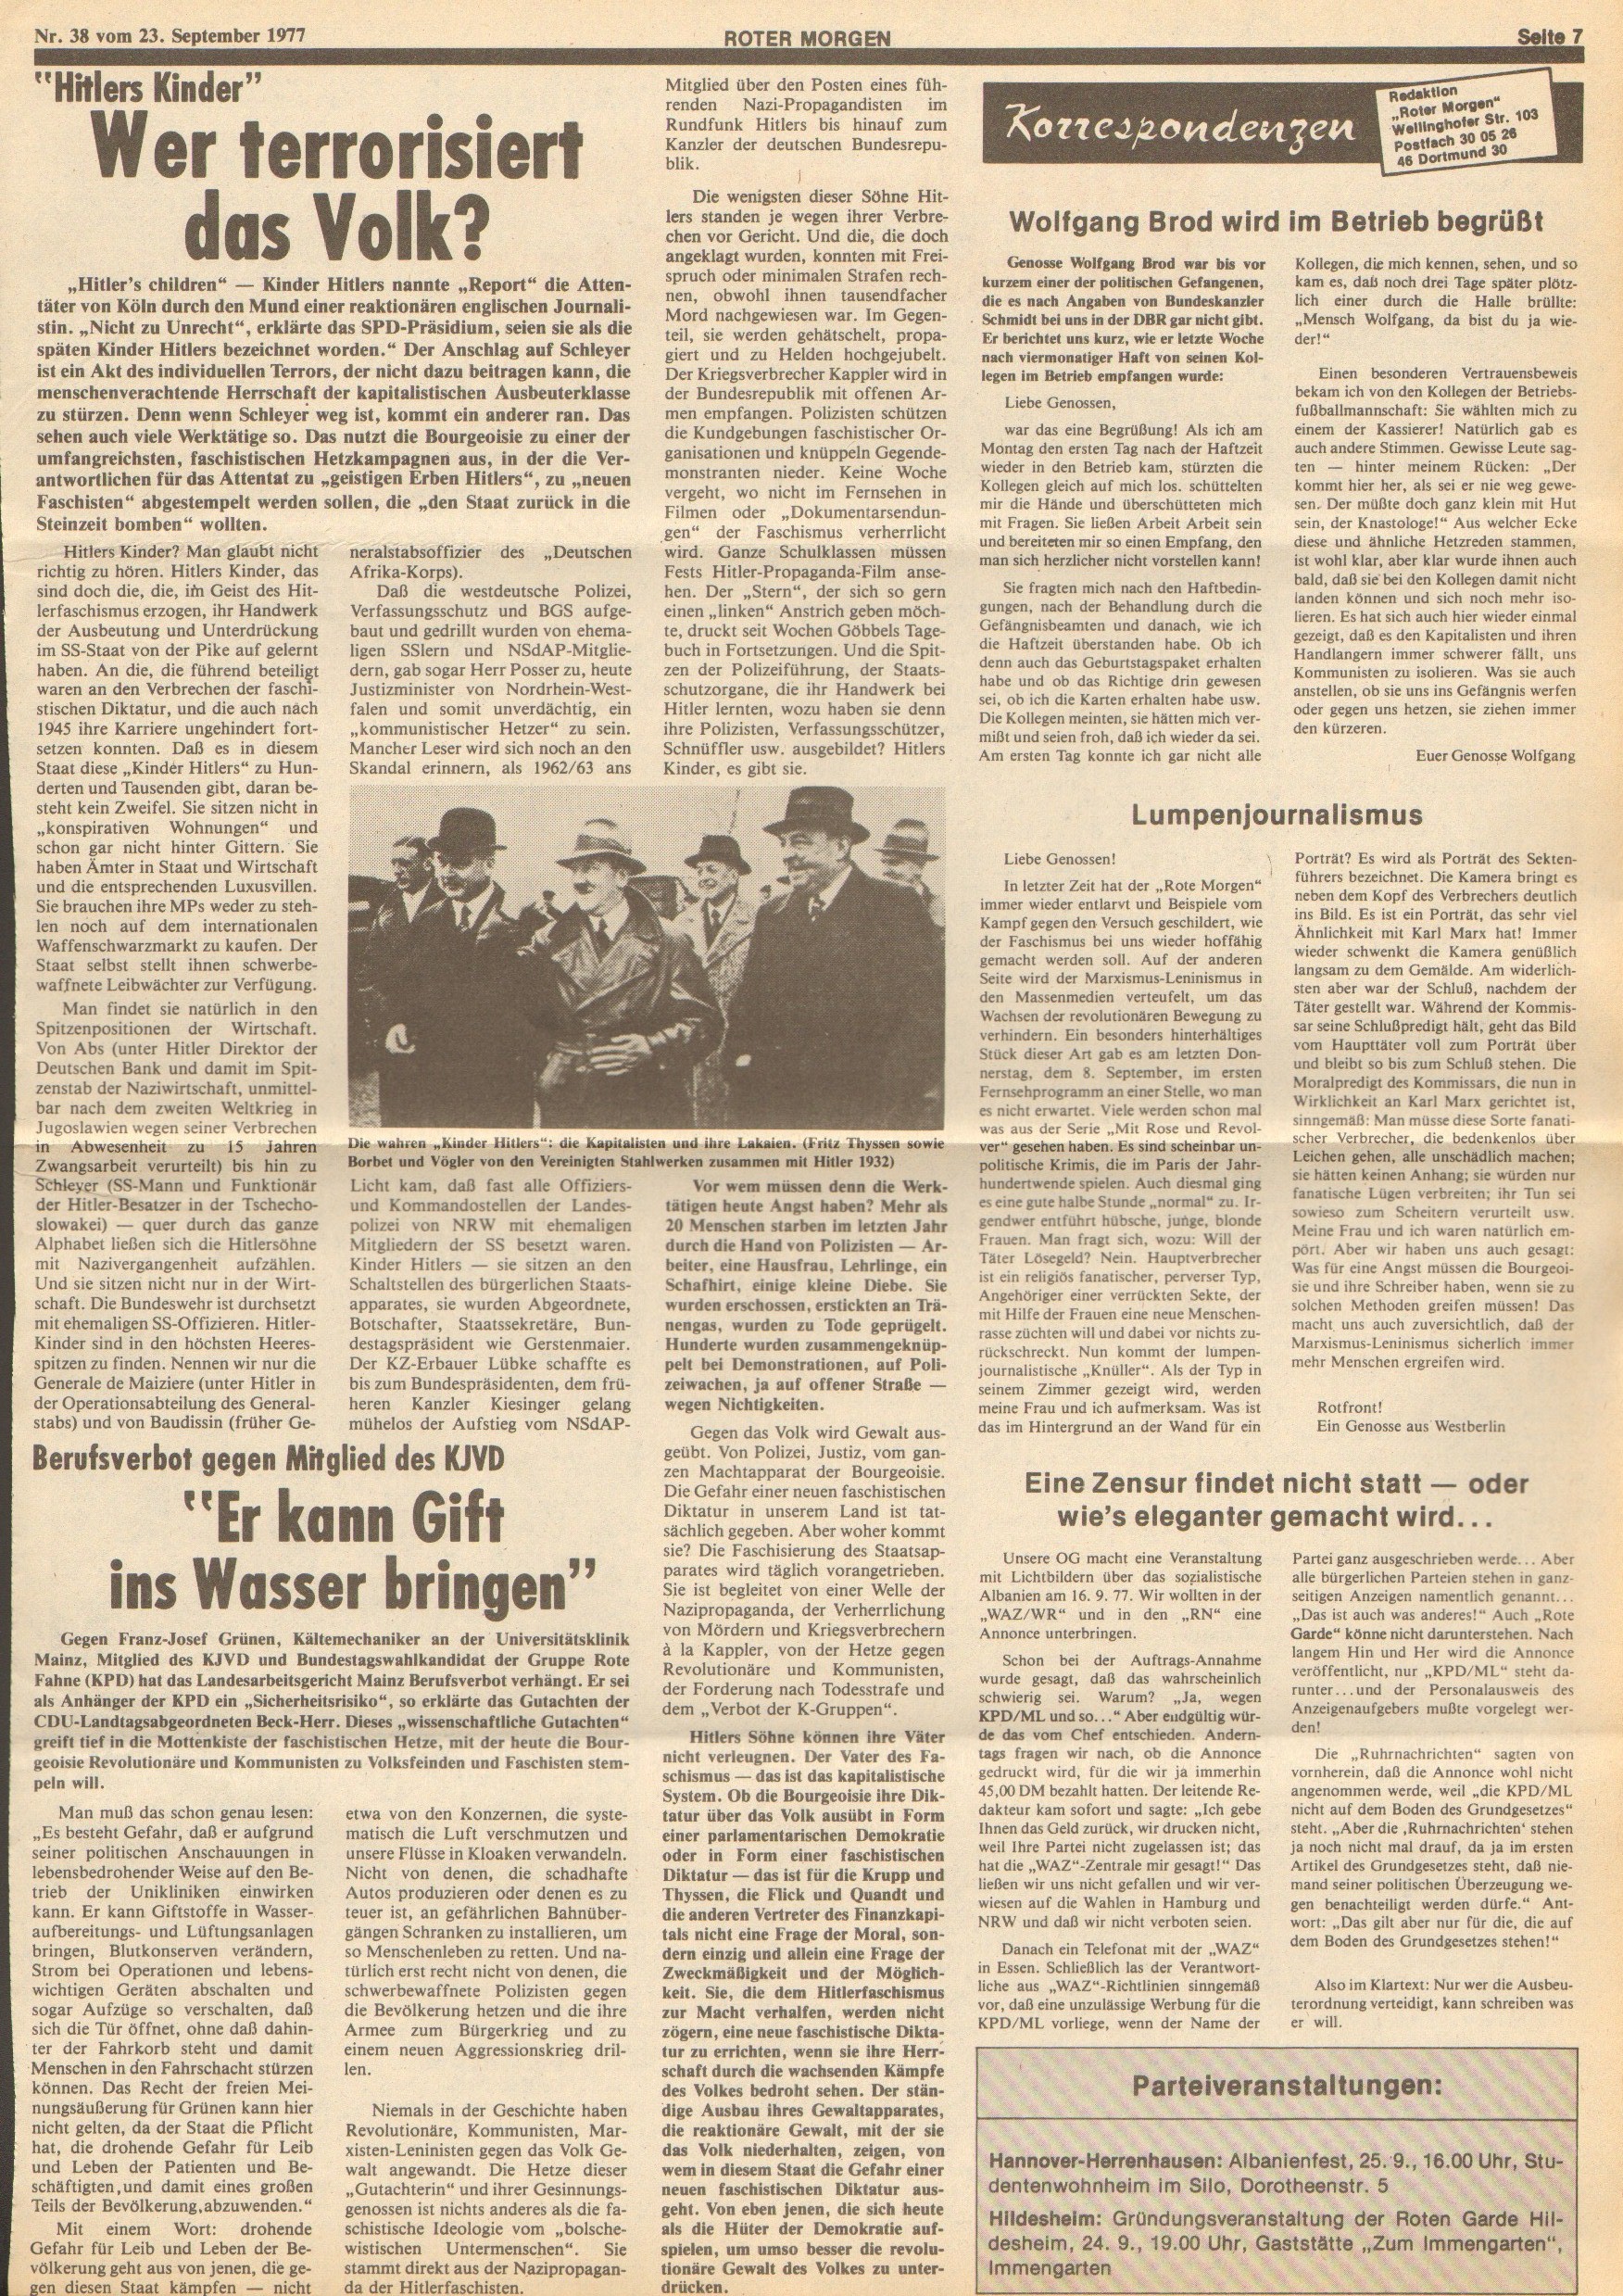 Roter Morgen, 11. Jg., 23. September 1977, Nr. 38, Seite 7